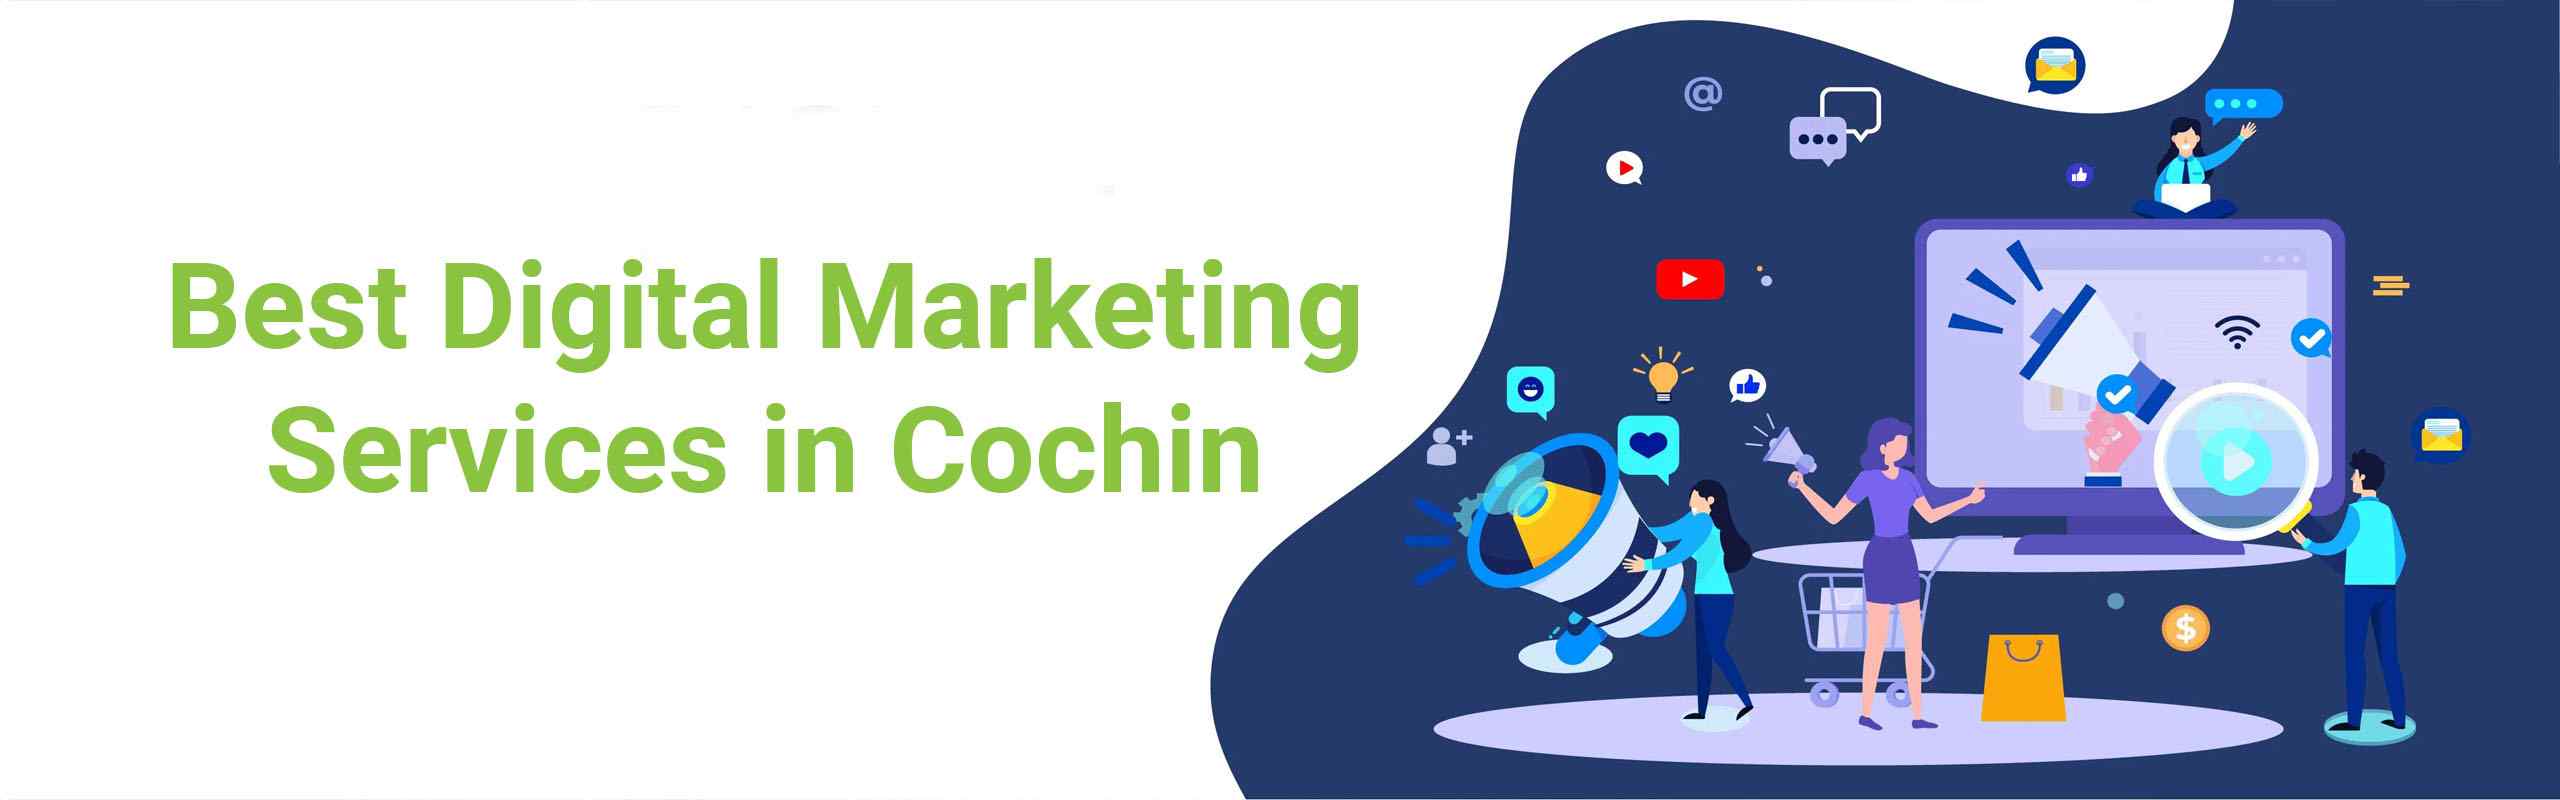 best digital marketing services in Cochin